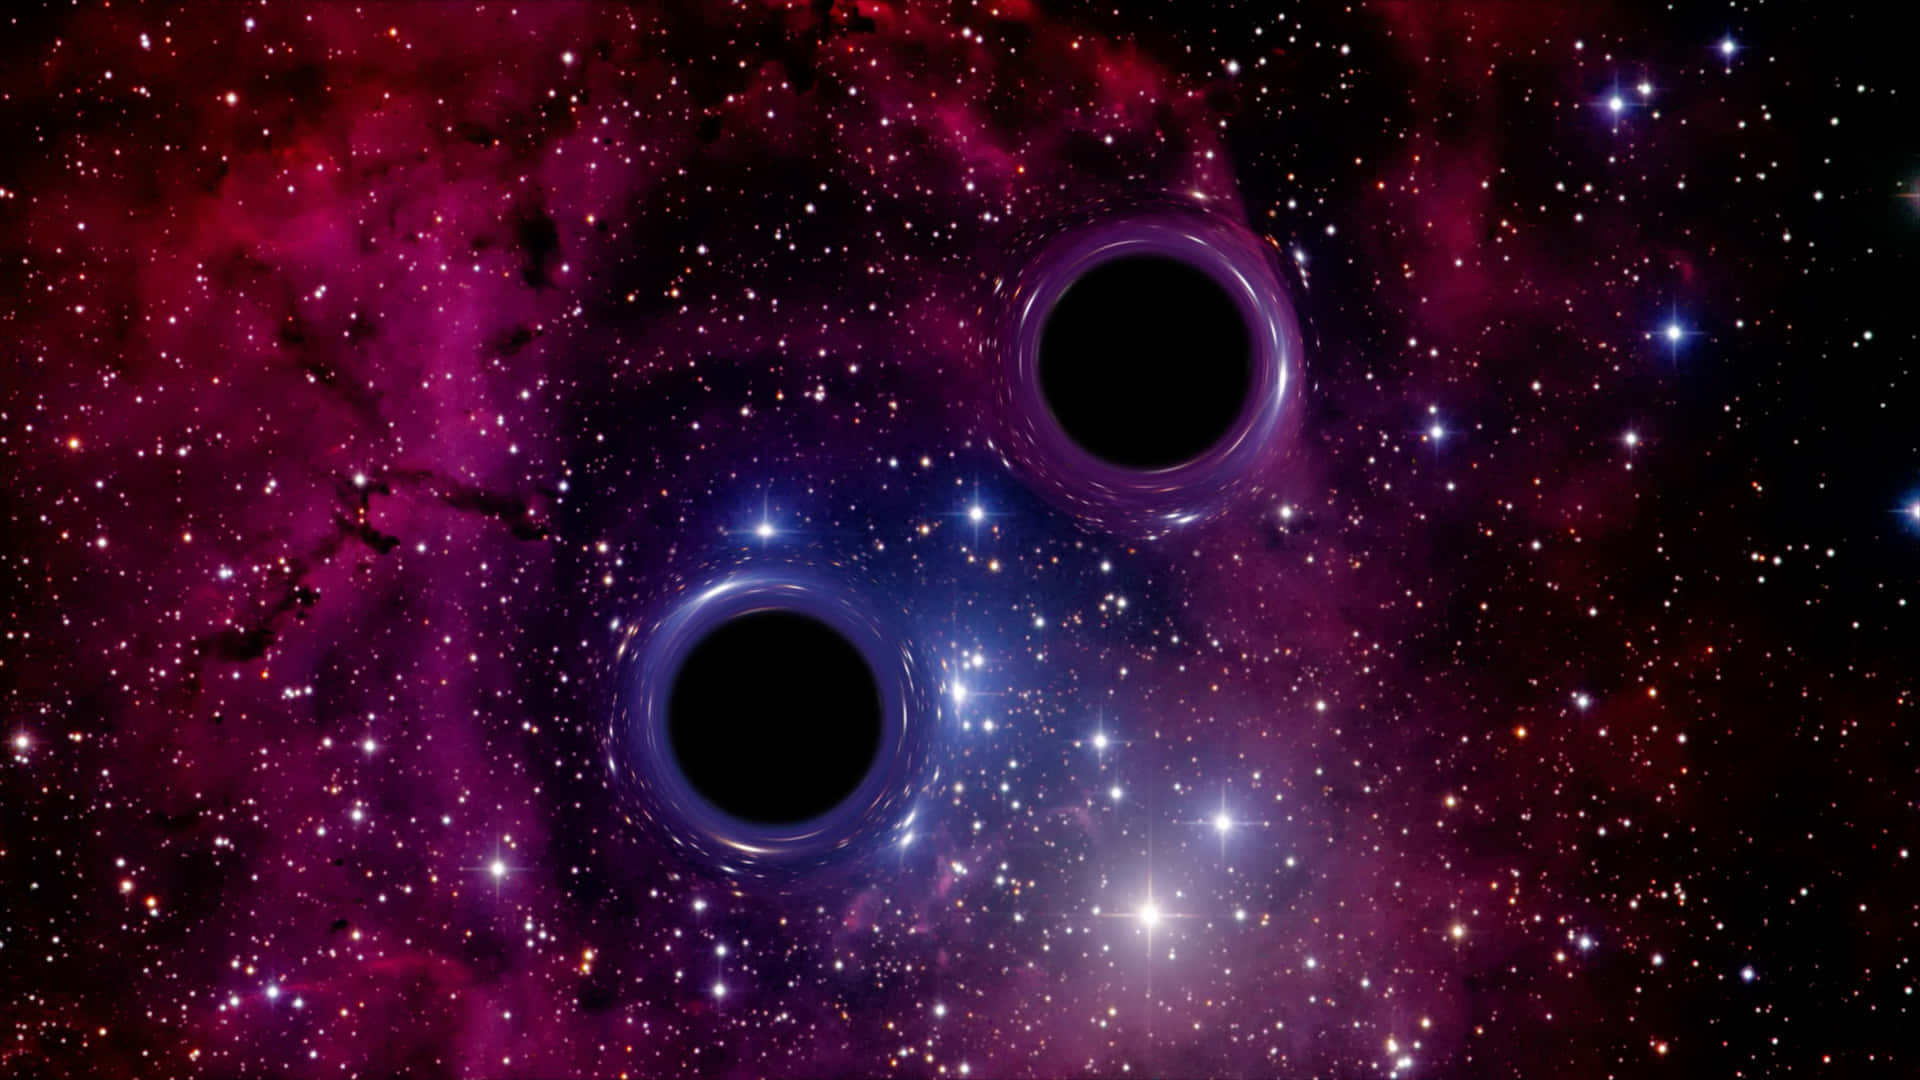 A Nasa photo of the Black Hole captured through the Hubble Telescope.